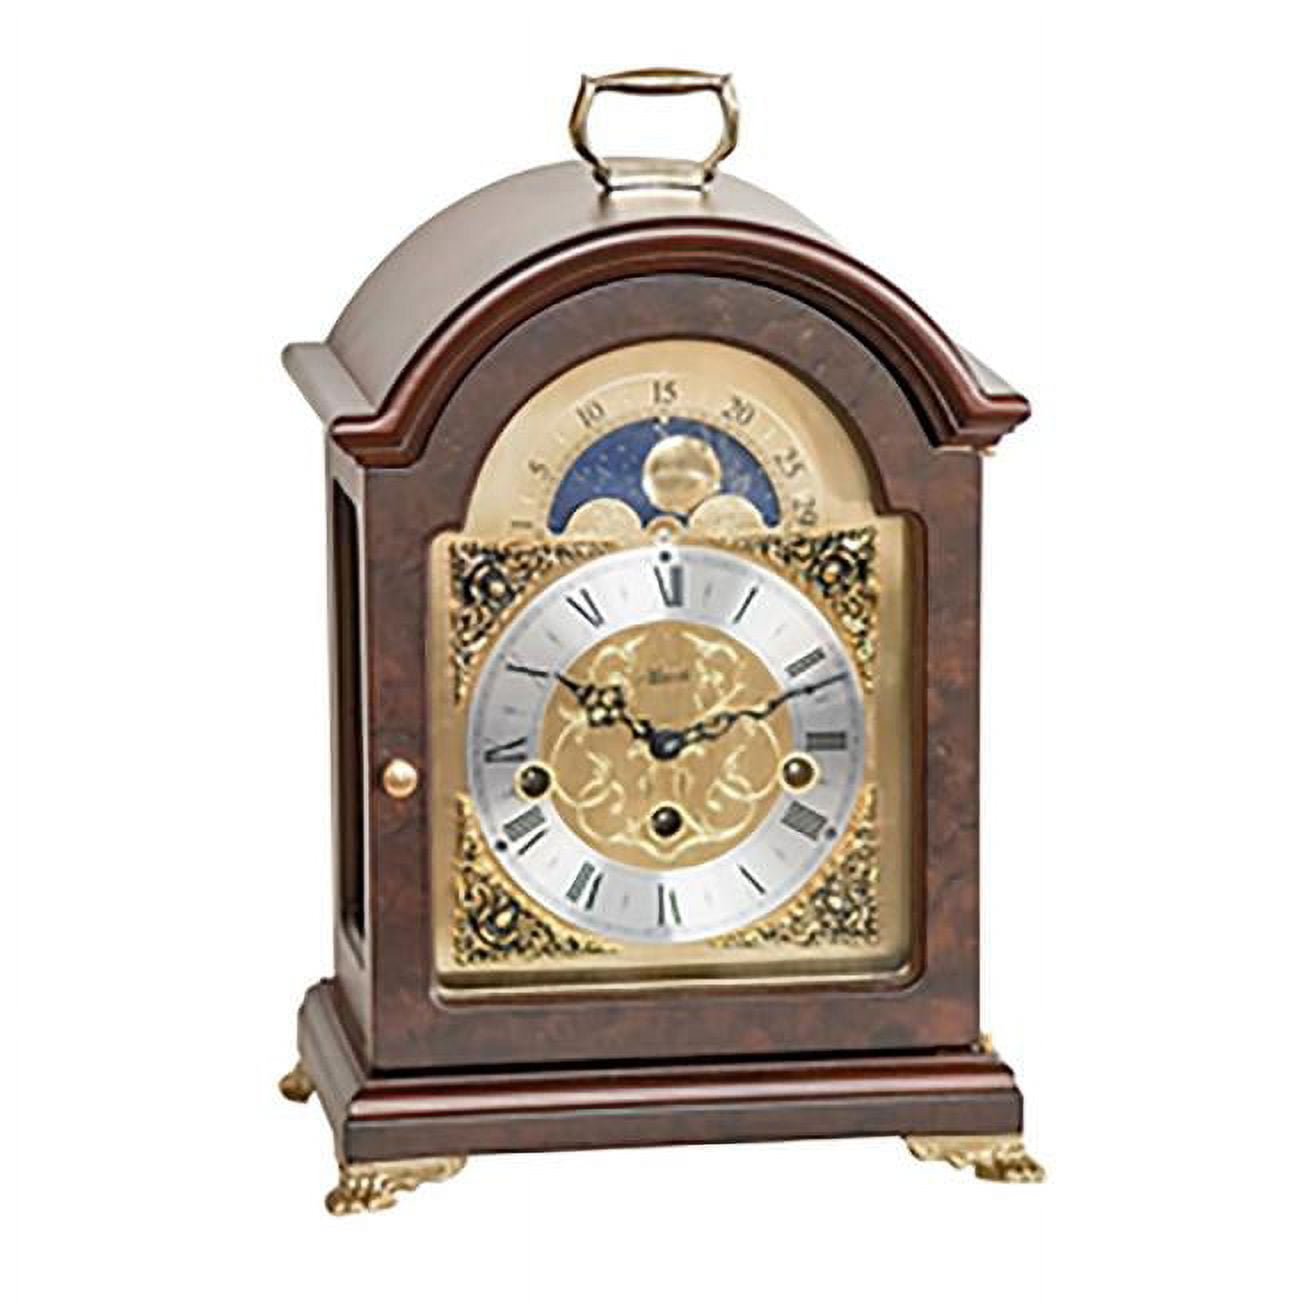 Ebros Steampunk Celestial Intergalactic Stormgrave Chronometer Decorative  Clock